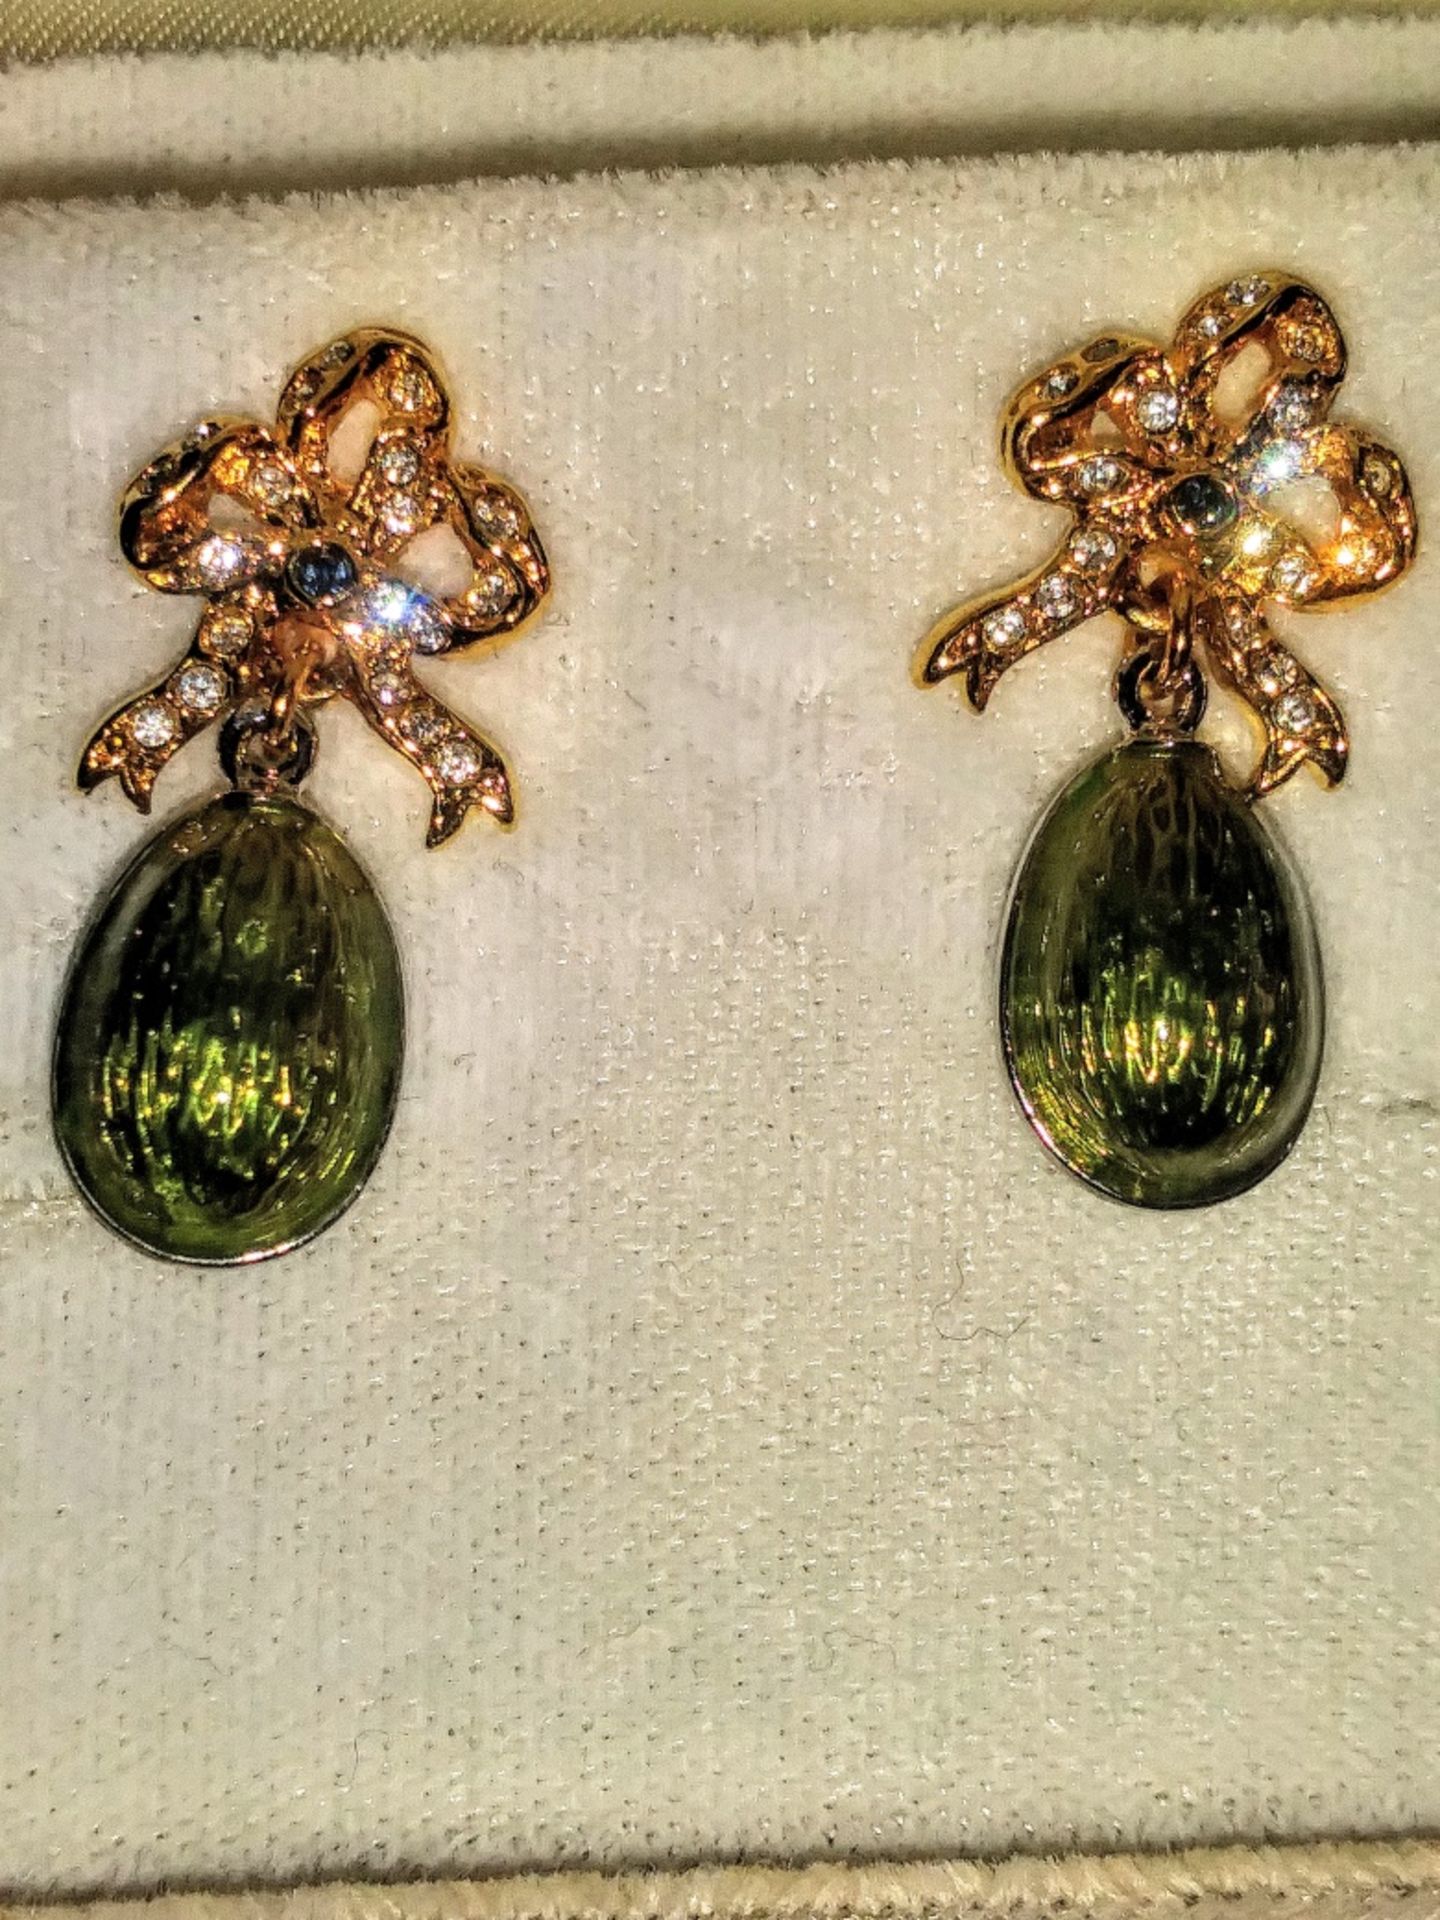 Enamel Earrings By Tatiana Faberge Carl Faberge's Great Granddaughter - Image 2 of 9